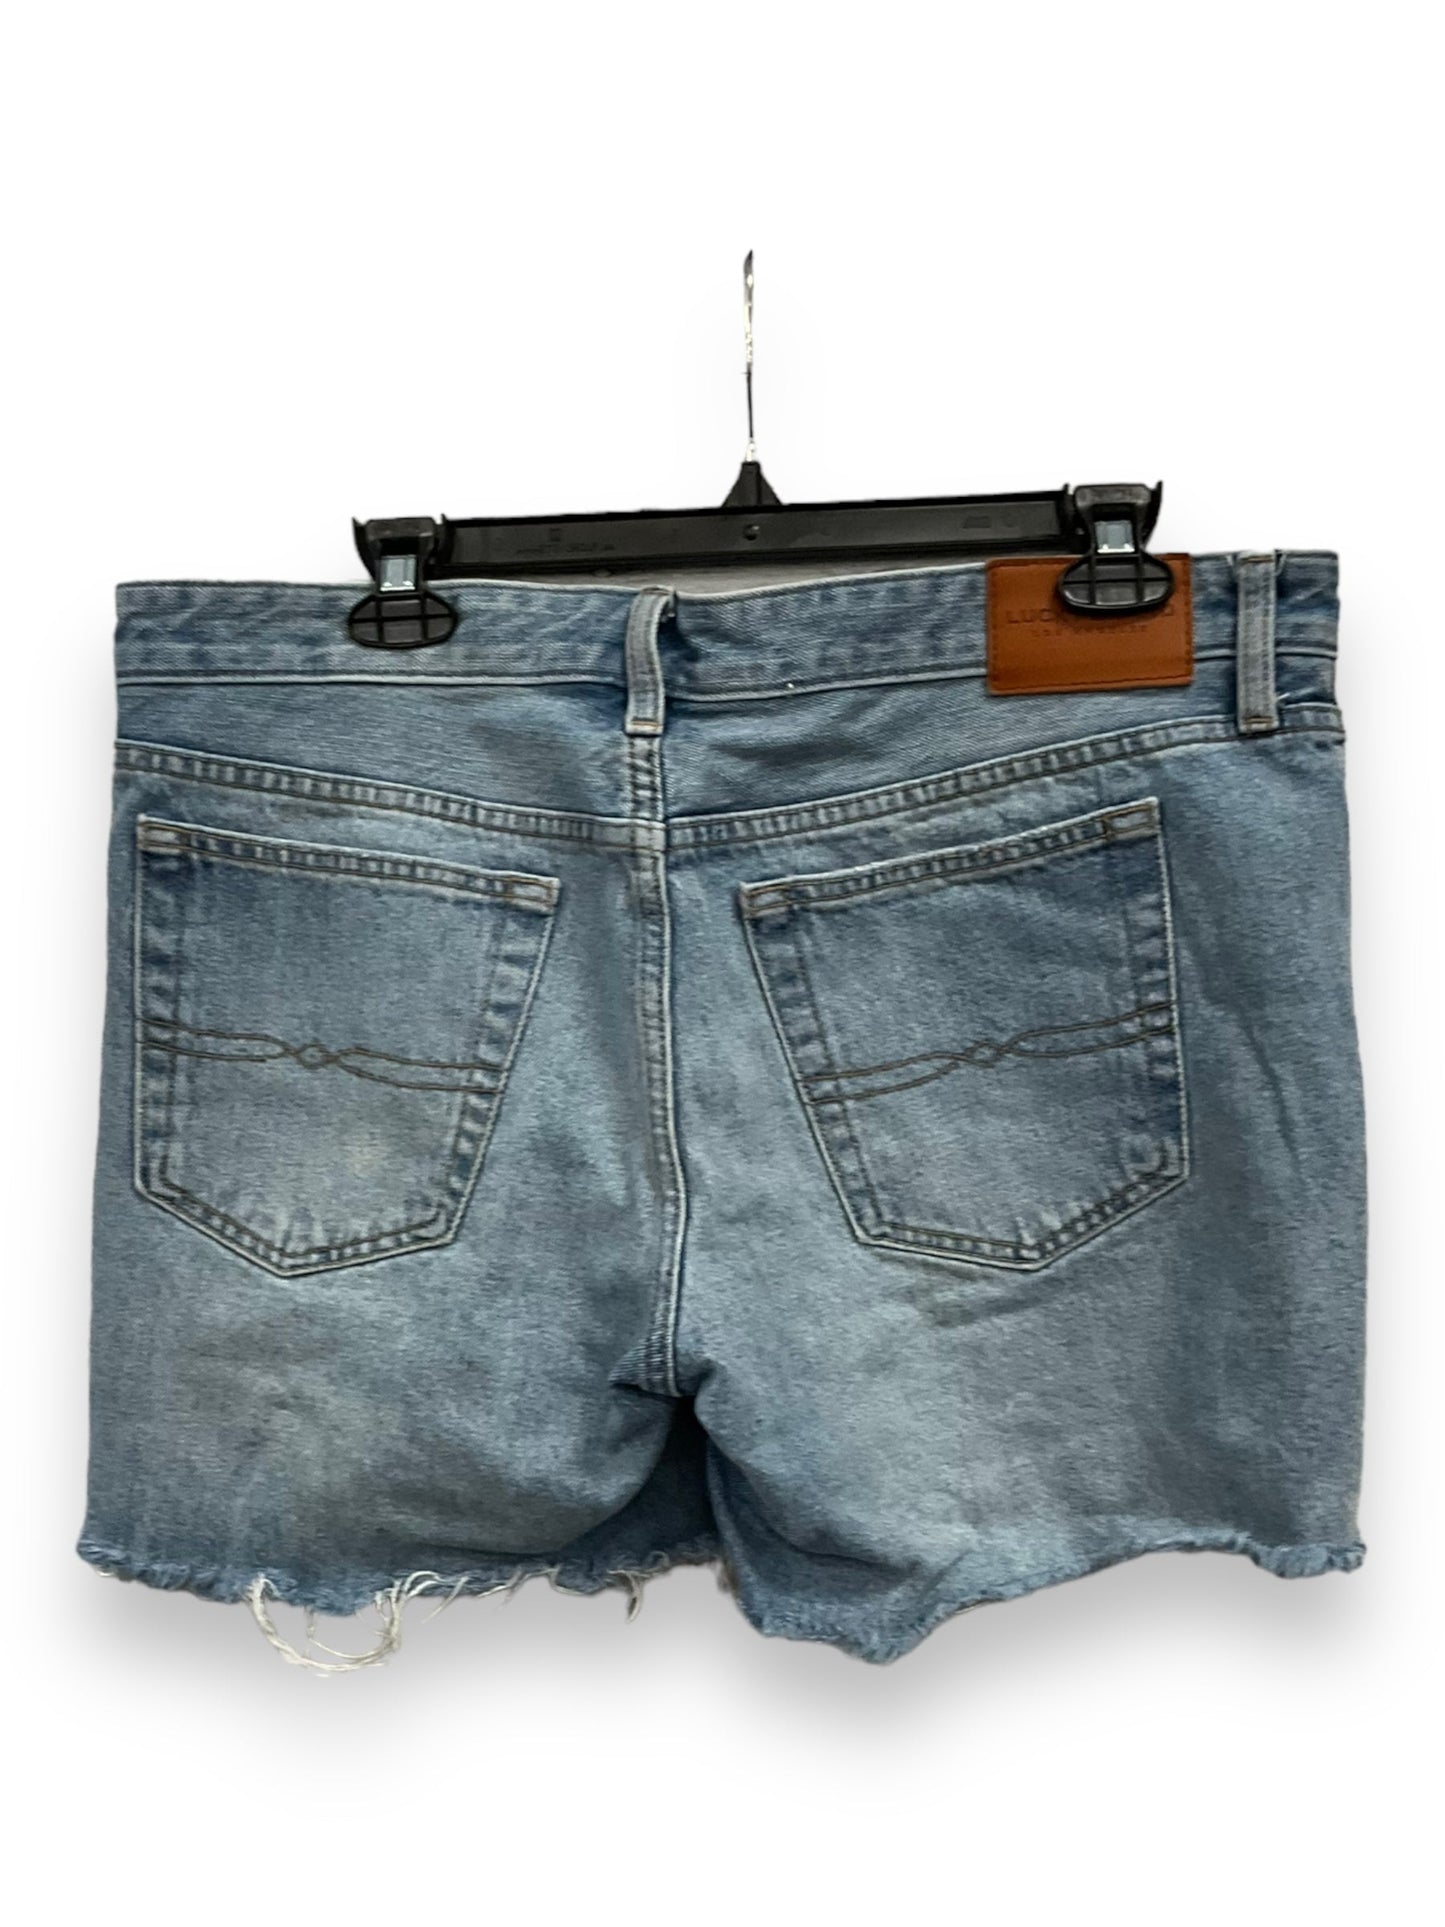 Blue Denim Shorts Lucky Brand, Size 10